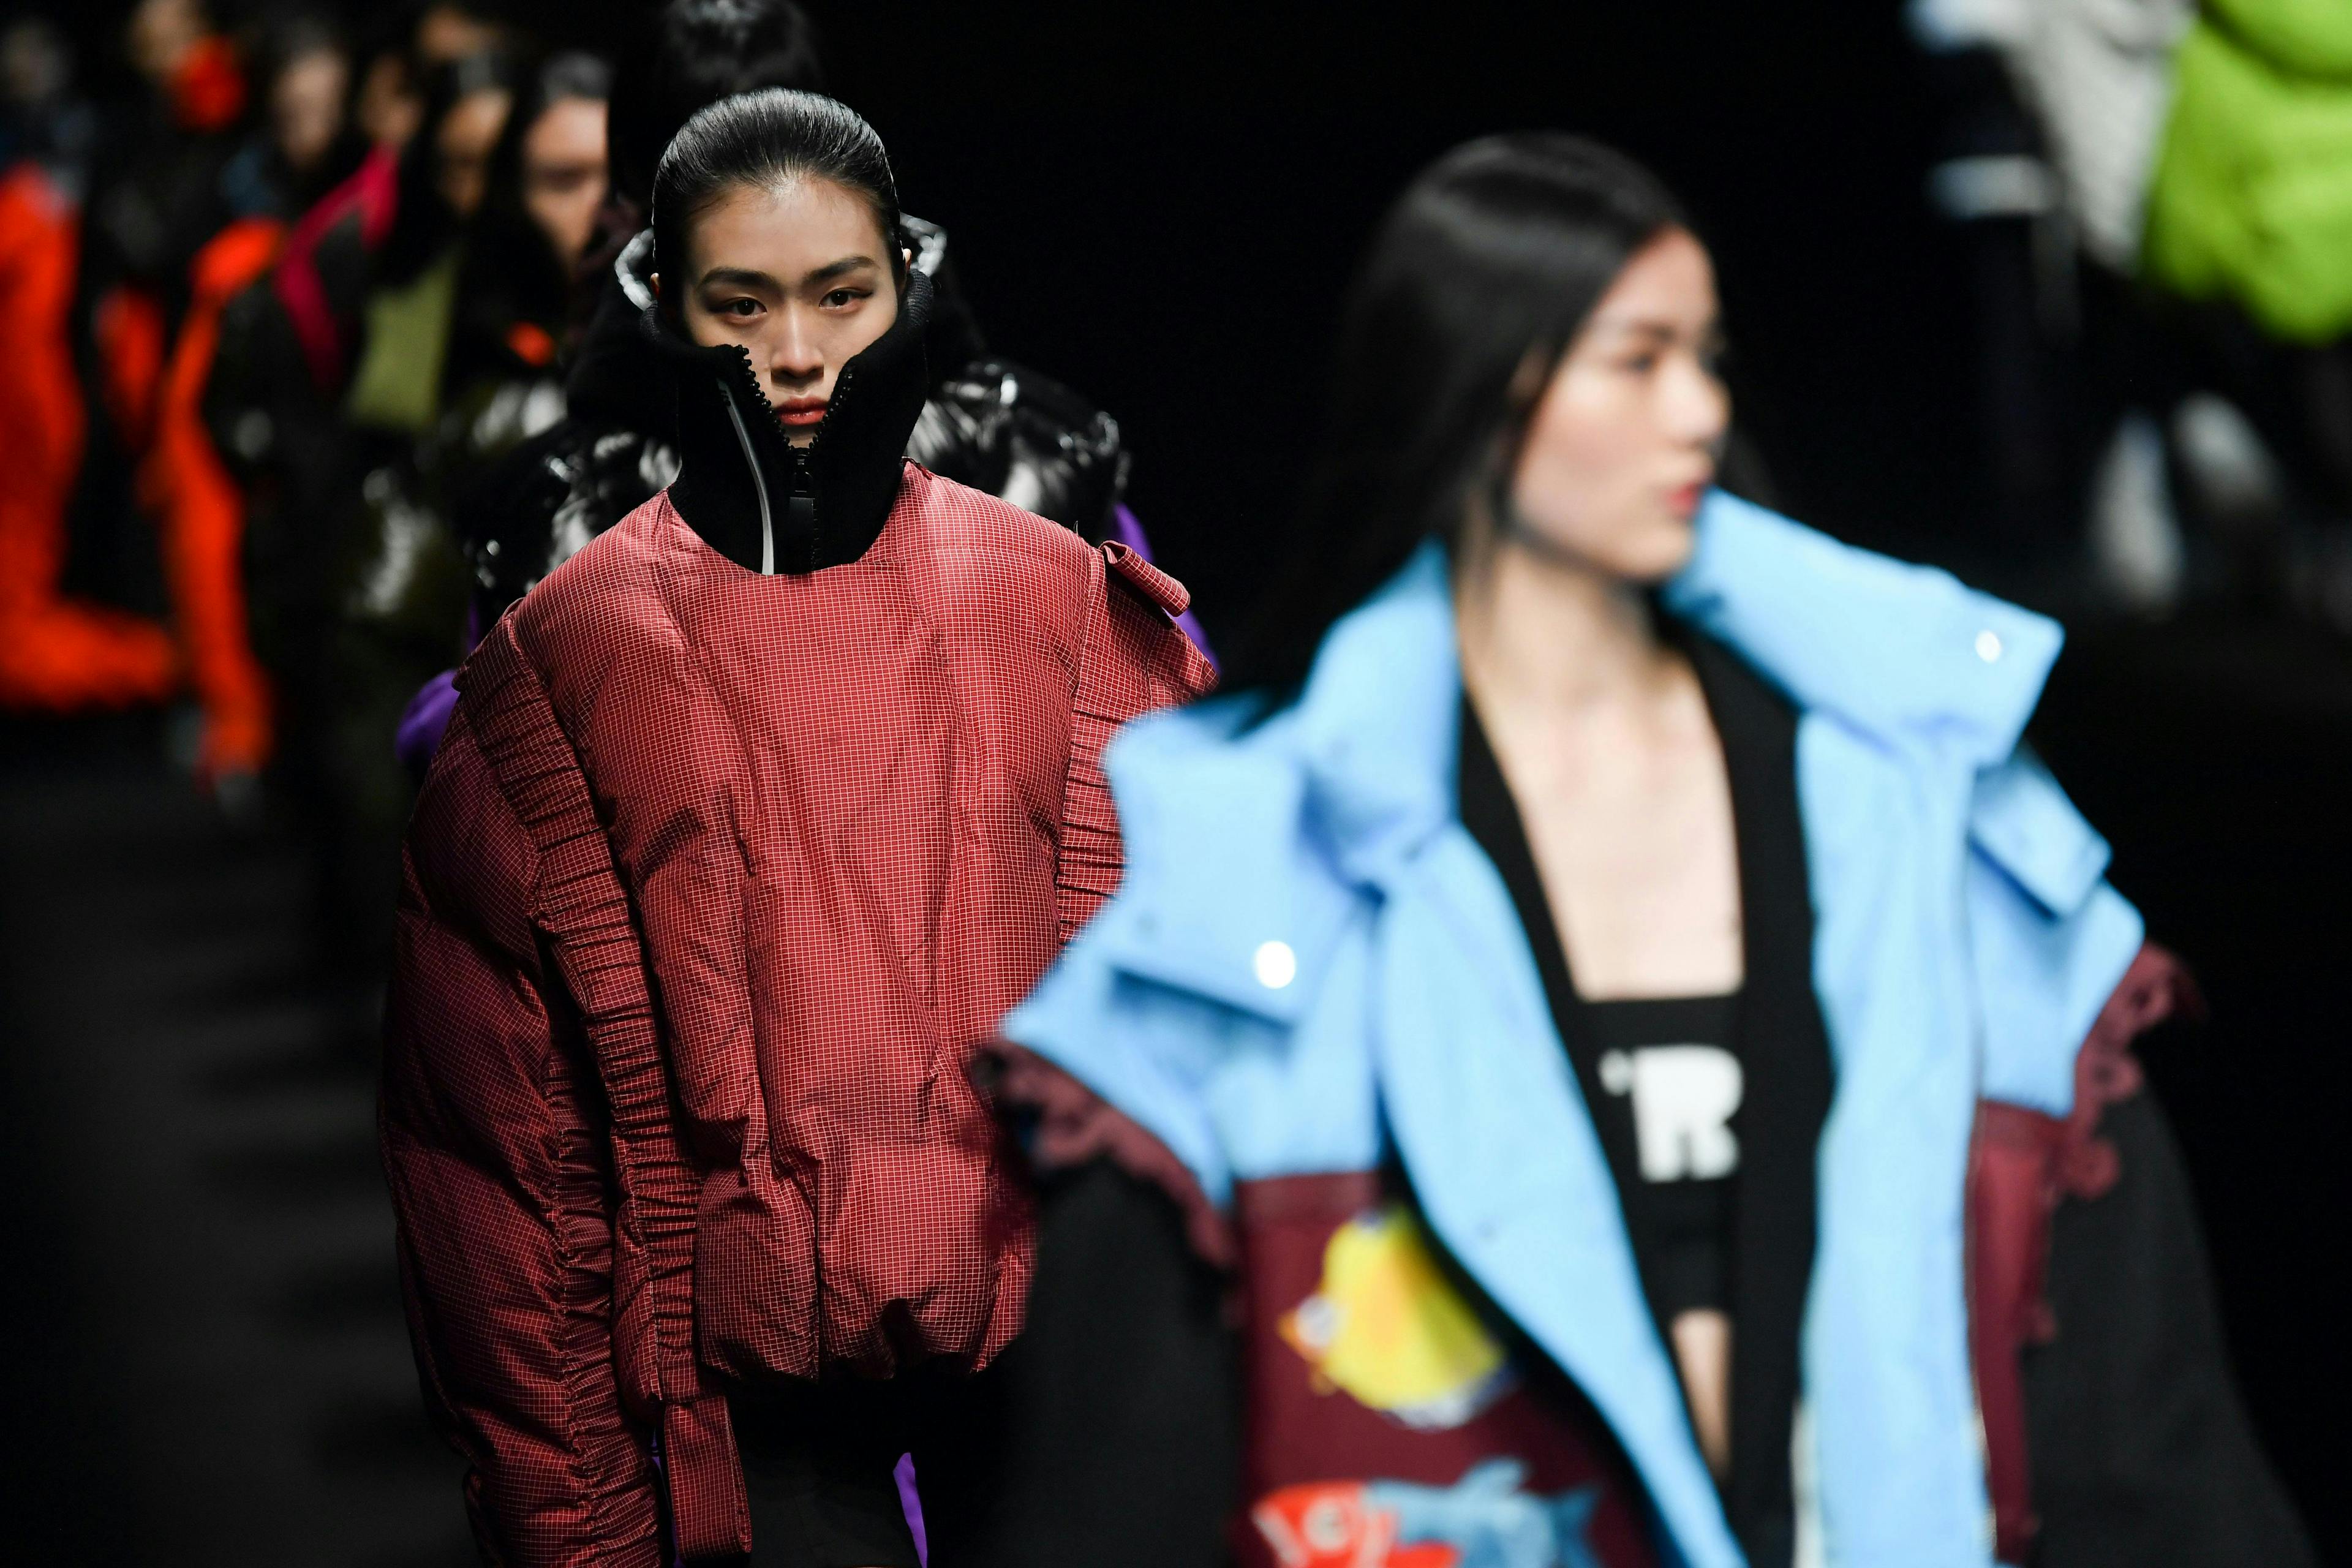 beijing coat fashion adult female person woman long sleeve jacket velvet face